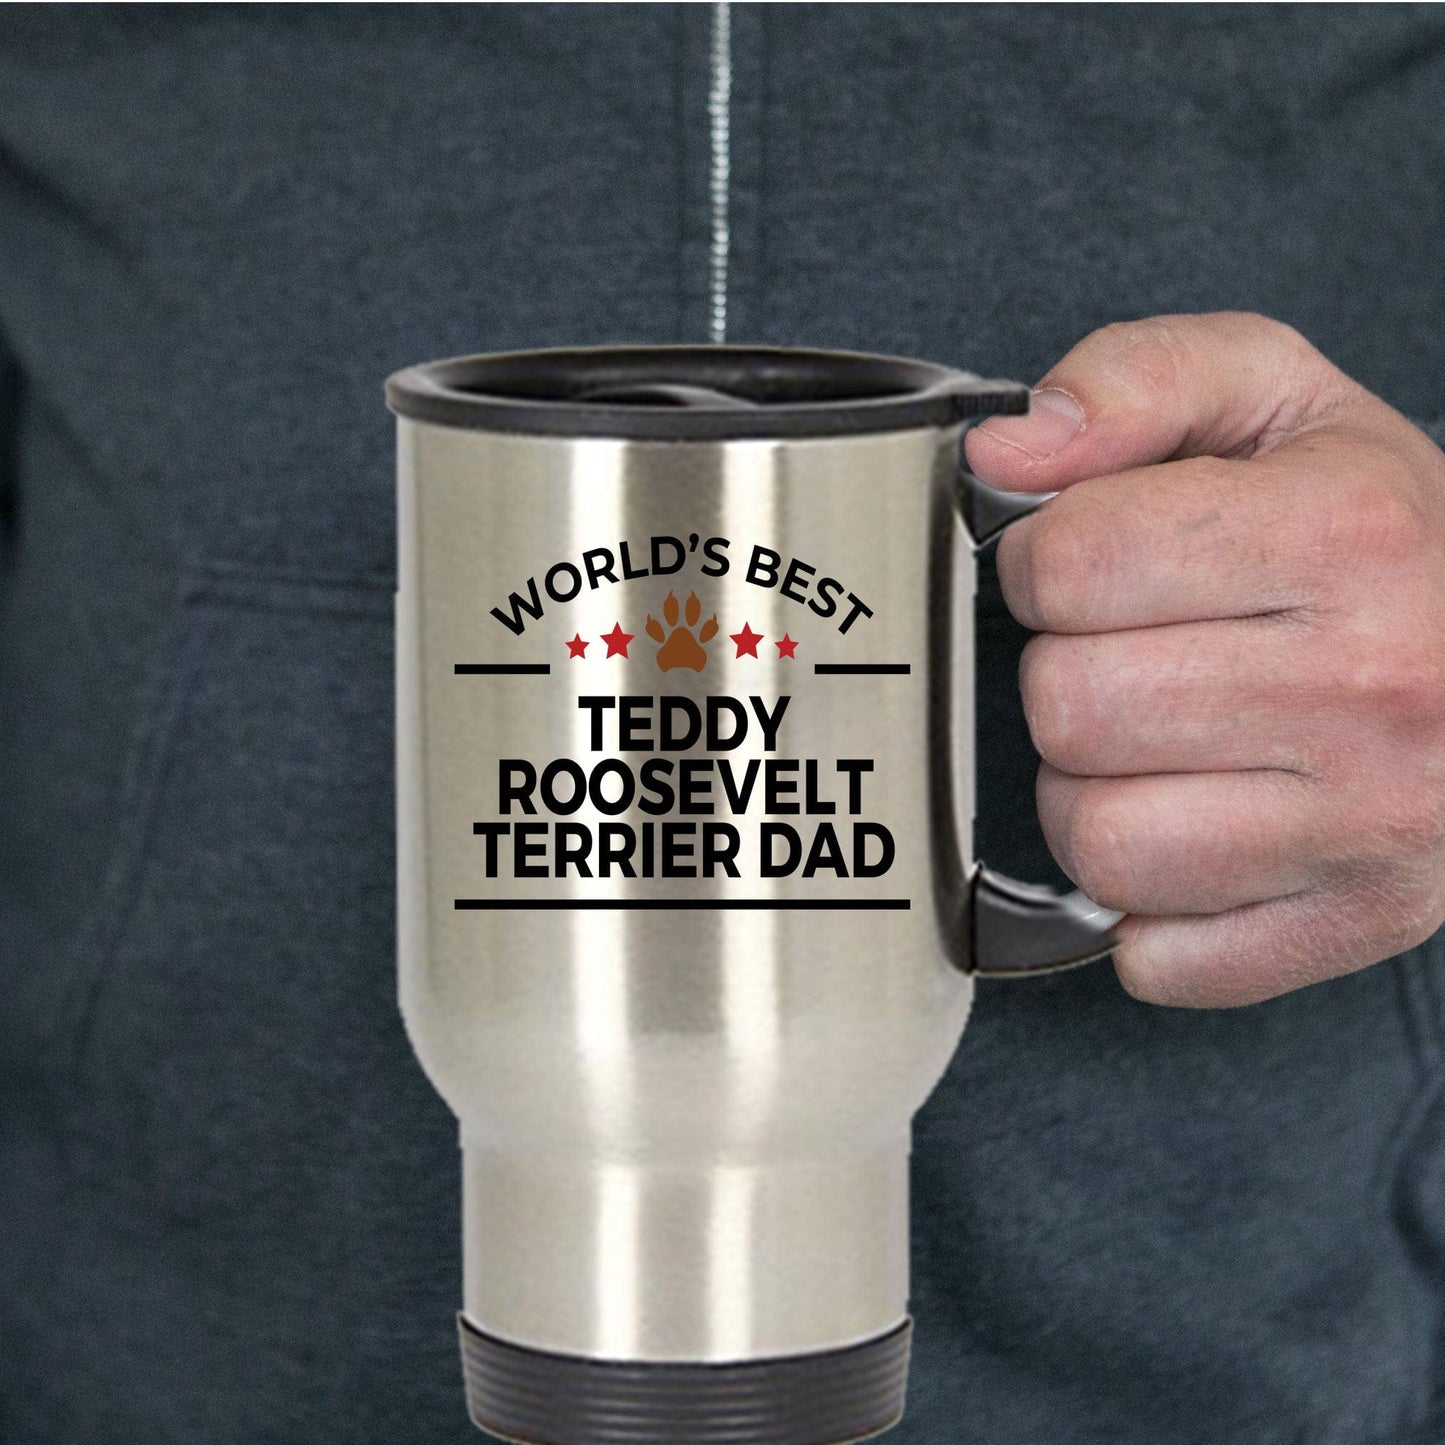 Teddy Roosevelt Terrier Dog Dad Travel Coffee Mug